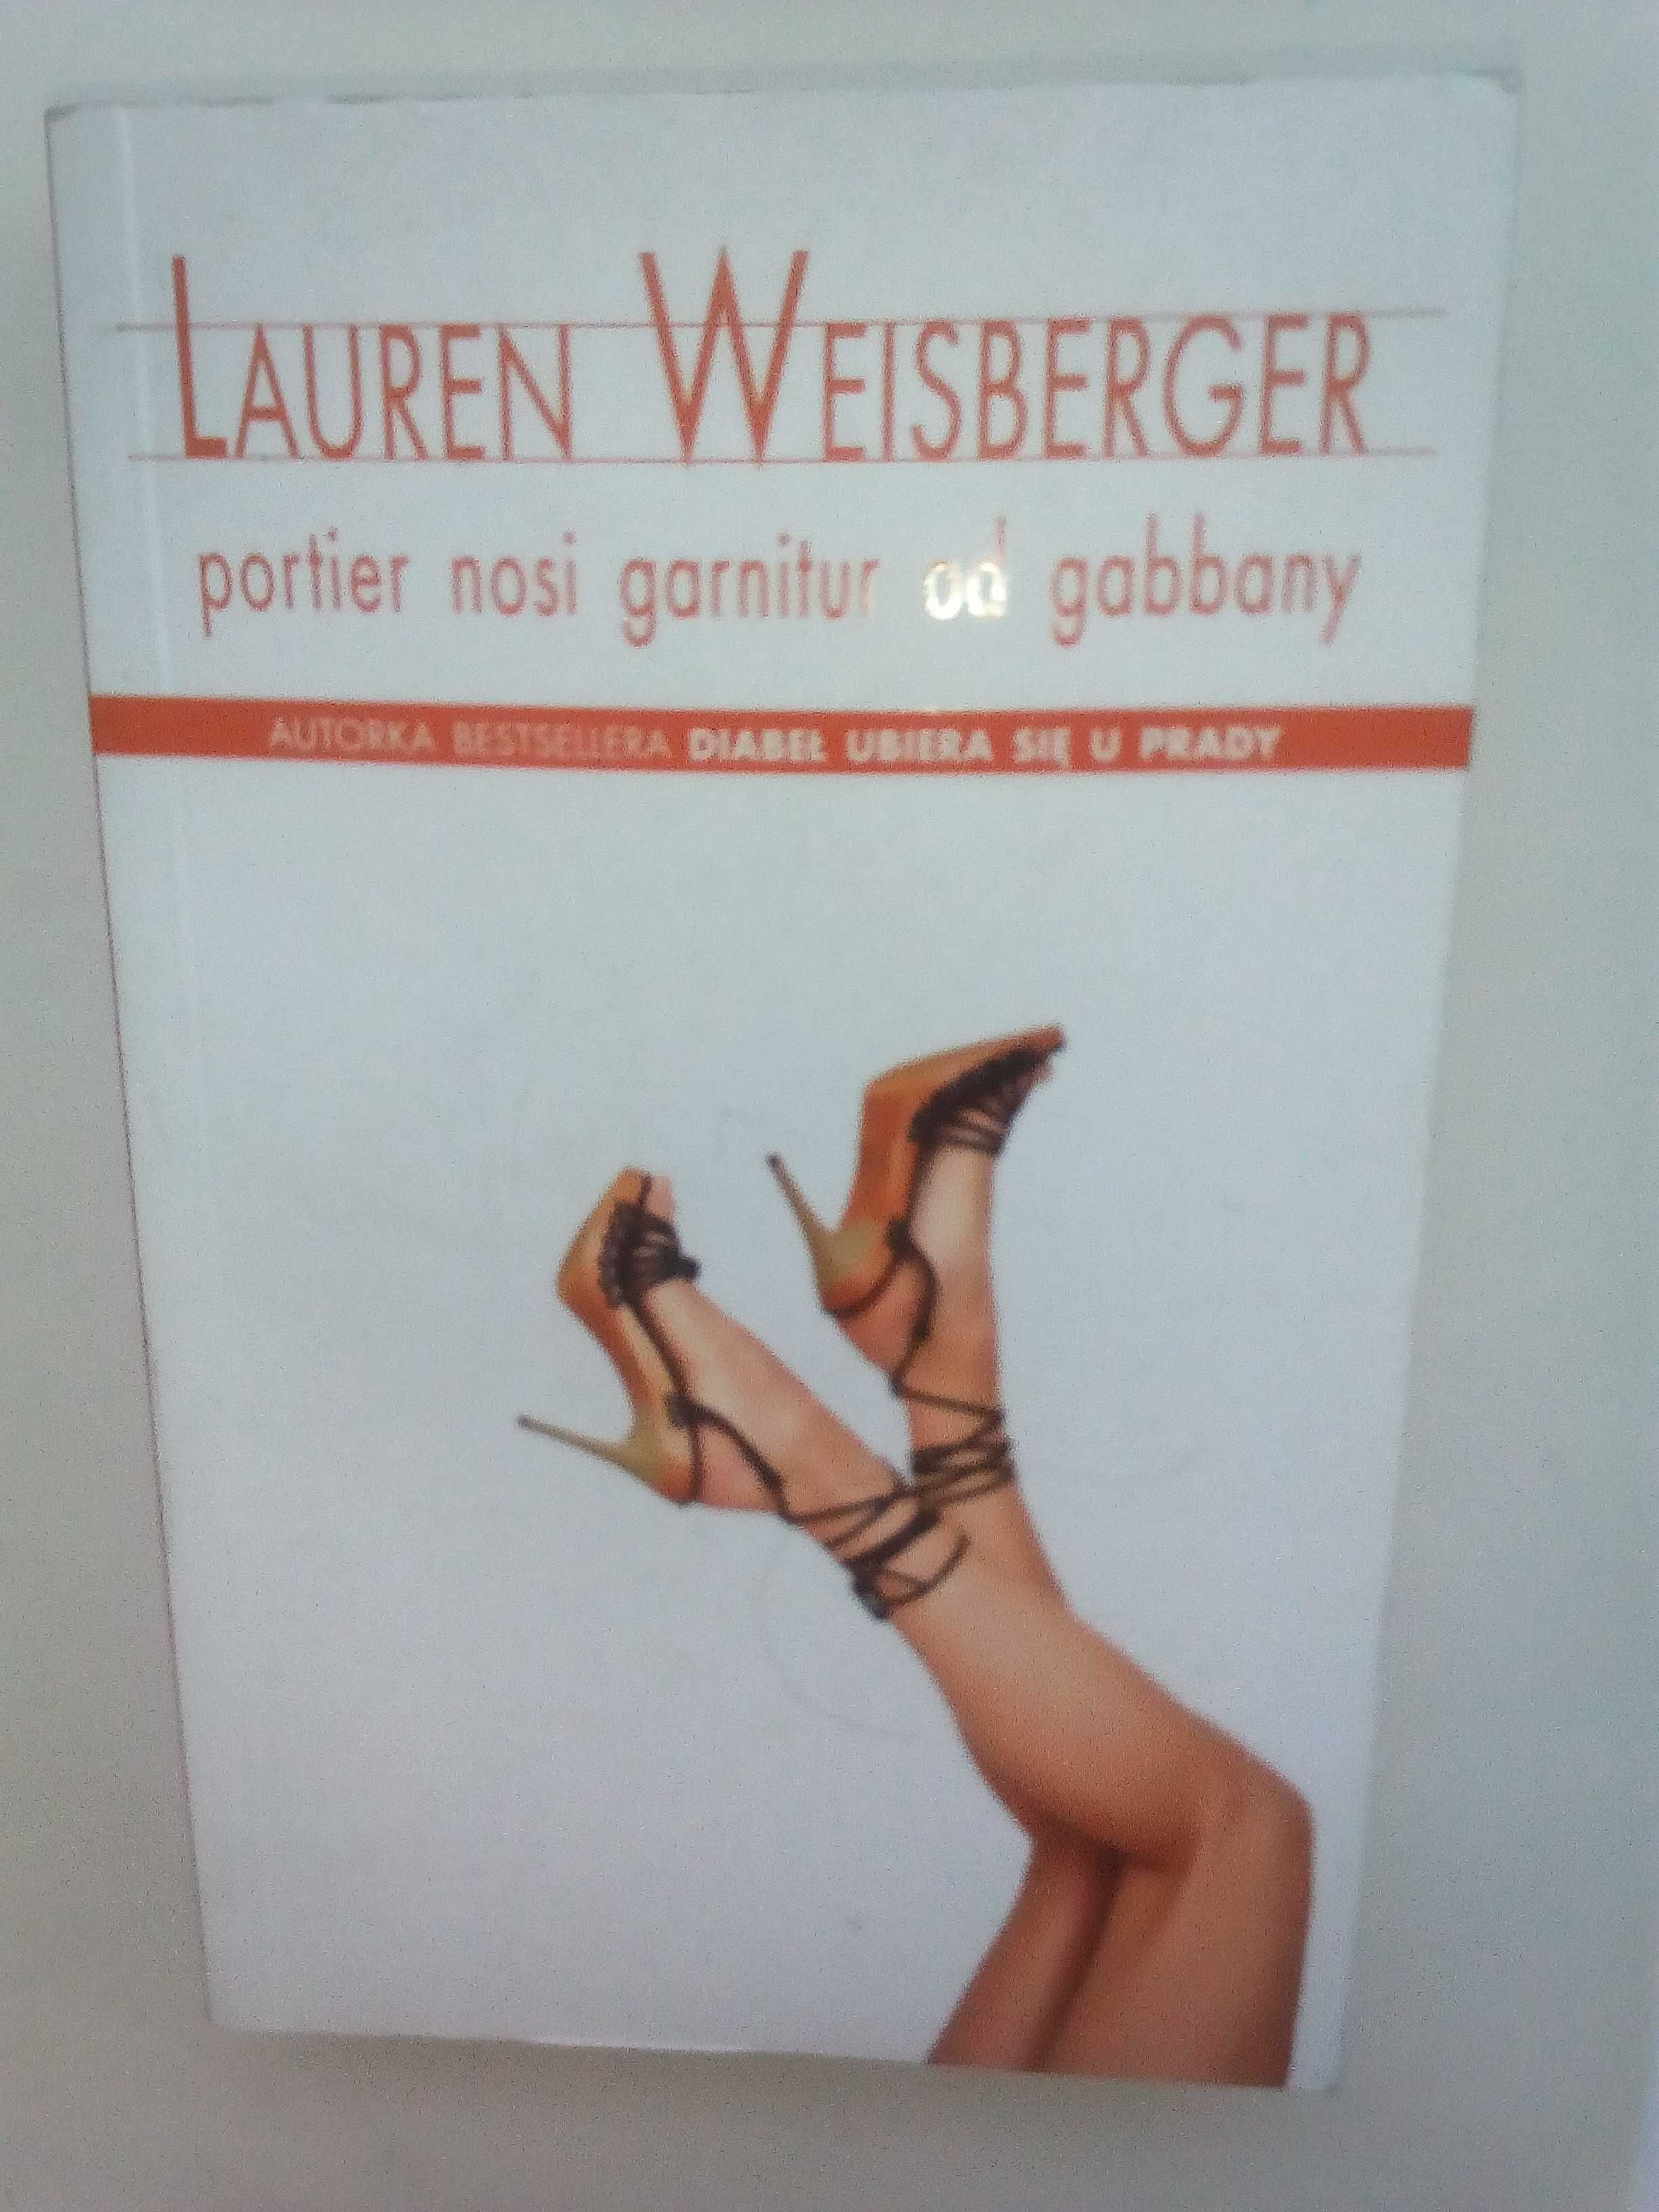 Portier nosi garnitur od Gabbany, Lauren Wiesberger